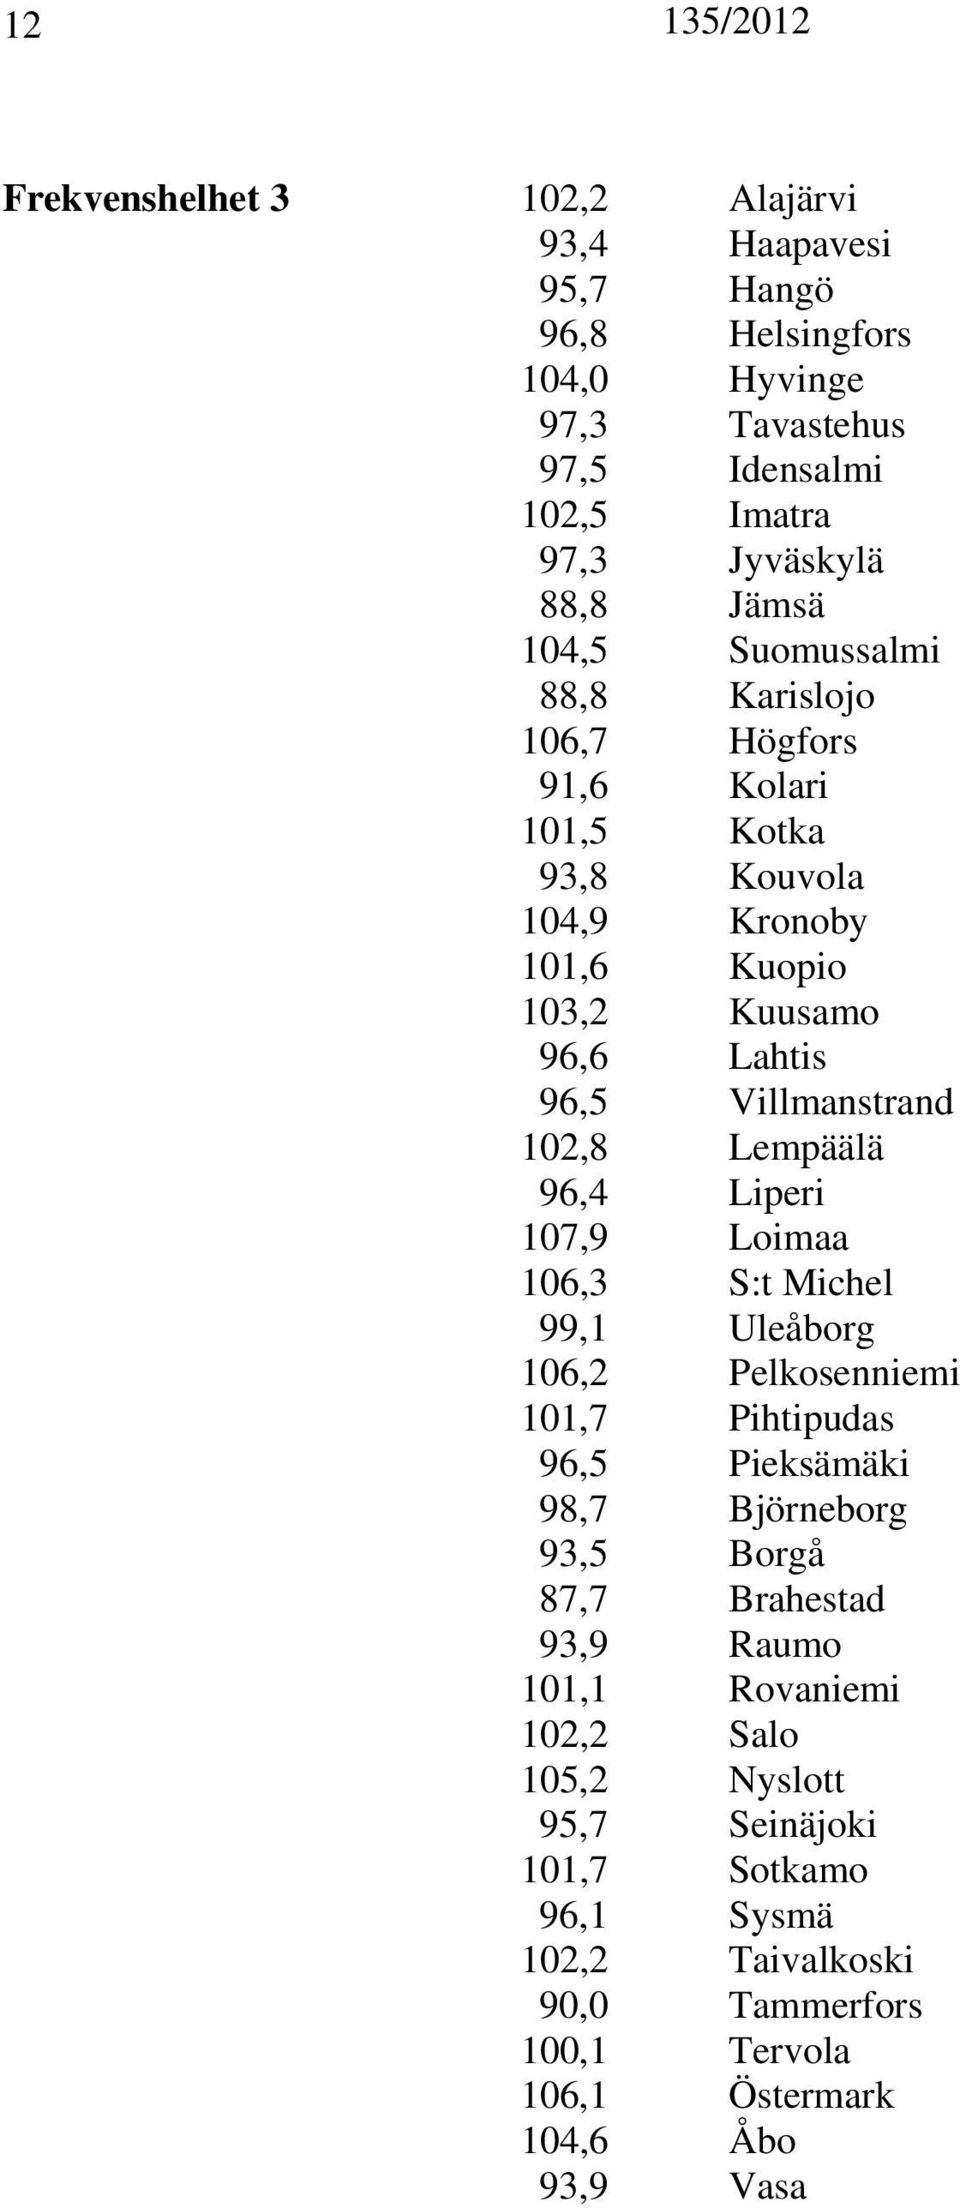 Lempäälä 96,4 Liperi 107,9 Loimaa 106,3 S:t Michel 99,1 Uleåborg 106,2 Pelkosenniemi 101,7 Pihtipudas 96,5 Pieksämäki 98,7 Björneborg 93,5 Borgå 87,7 Brahestad 93,9